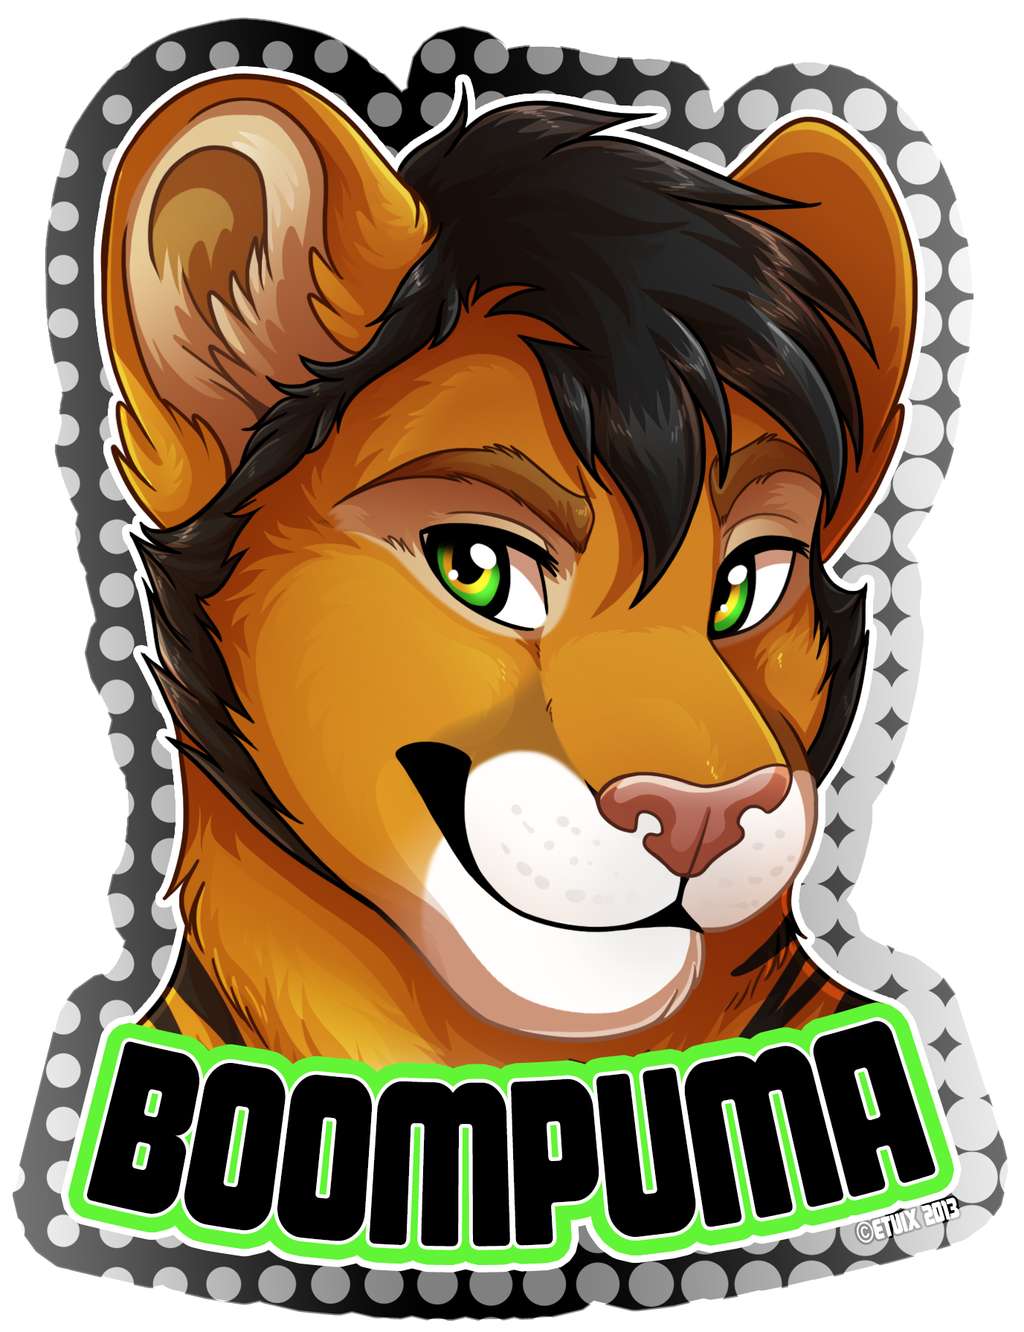 Most recent image: Boompuma Badge